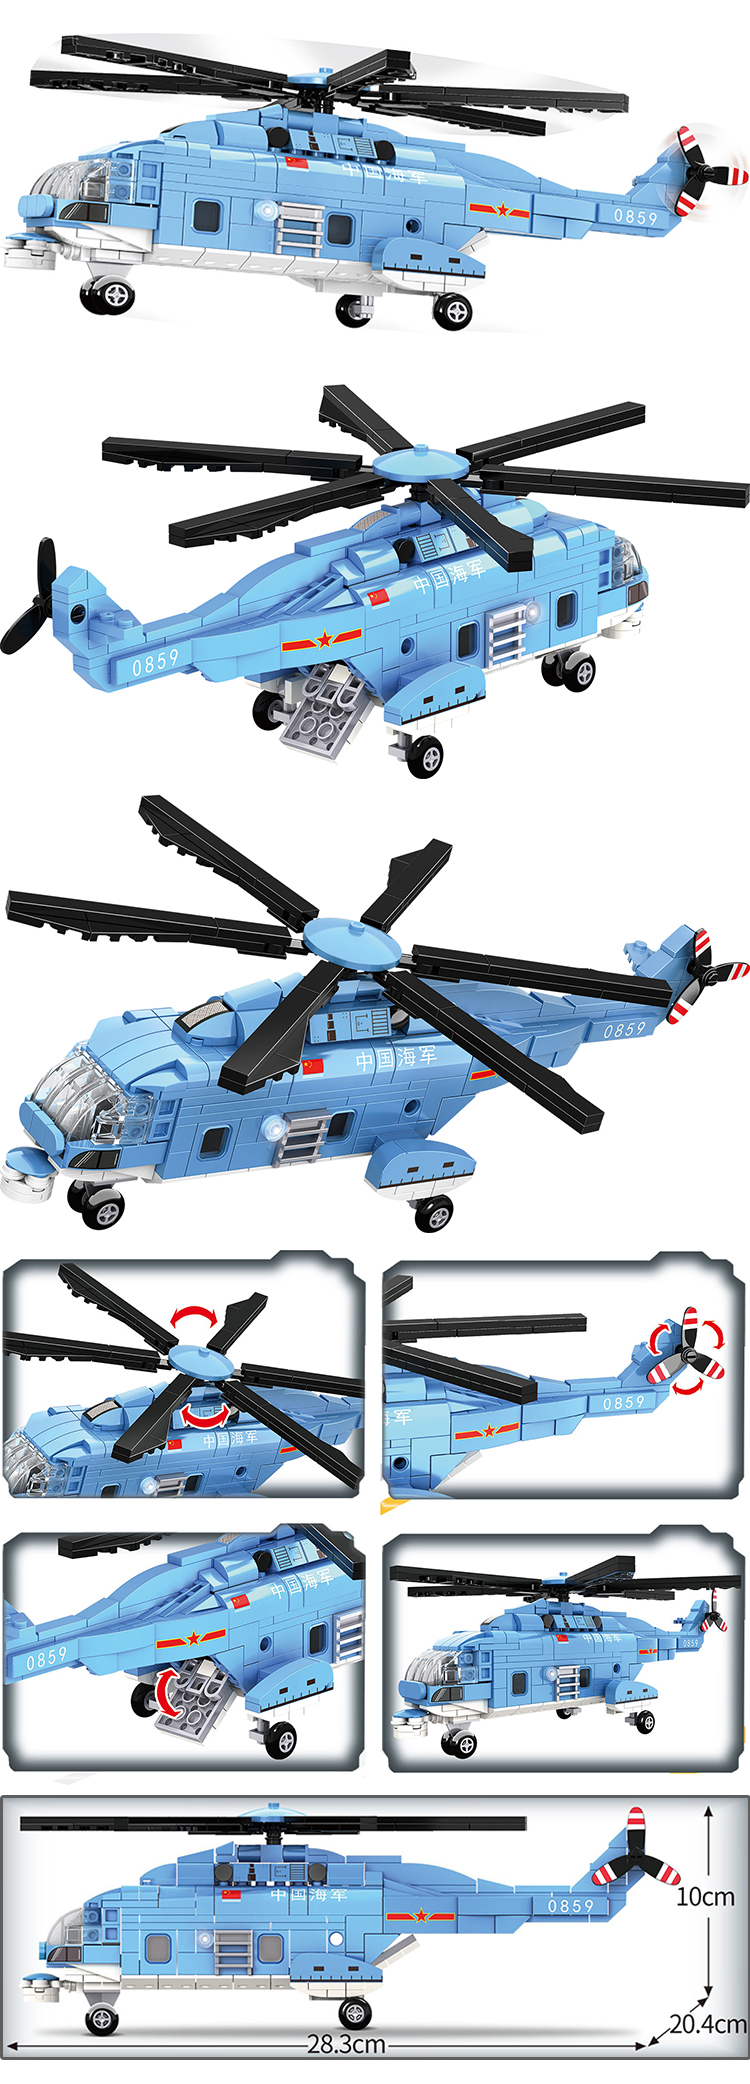 WOMA TOYS simple transport helicopter model children building blocks toys diy bricks for Kids birthday present Gift Set